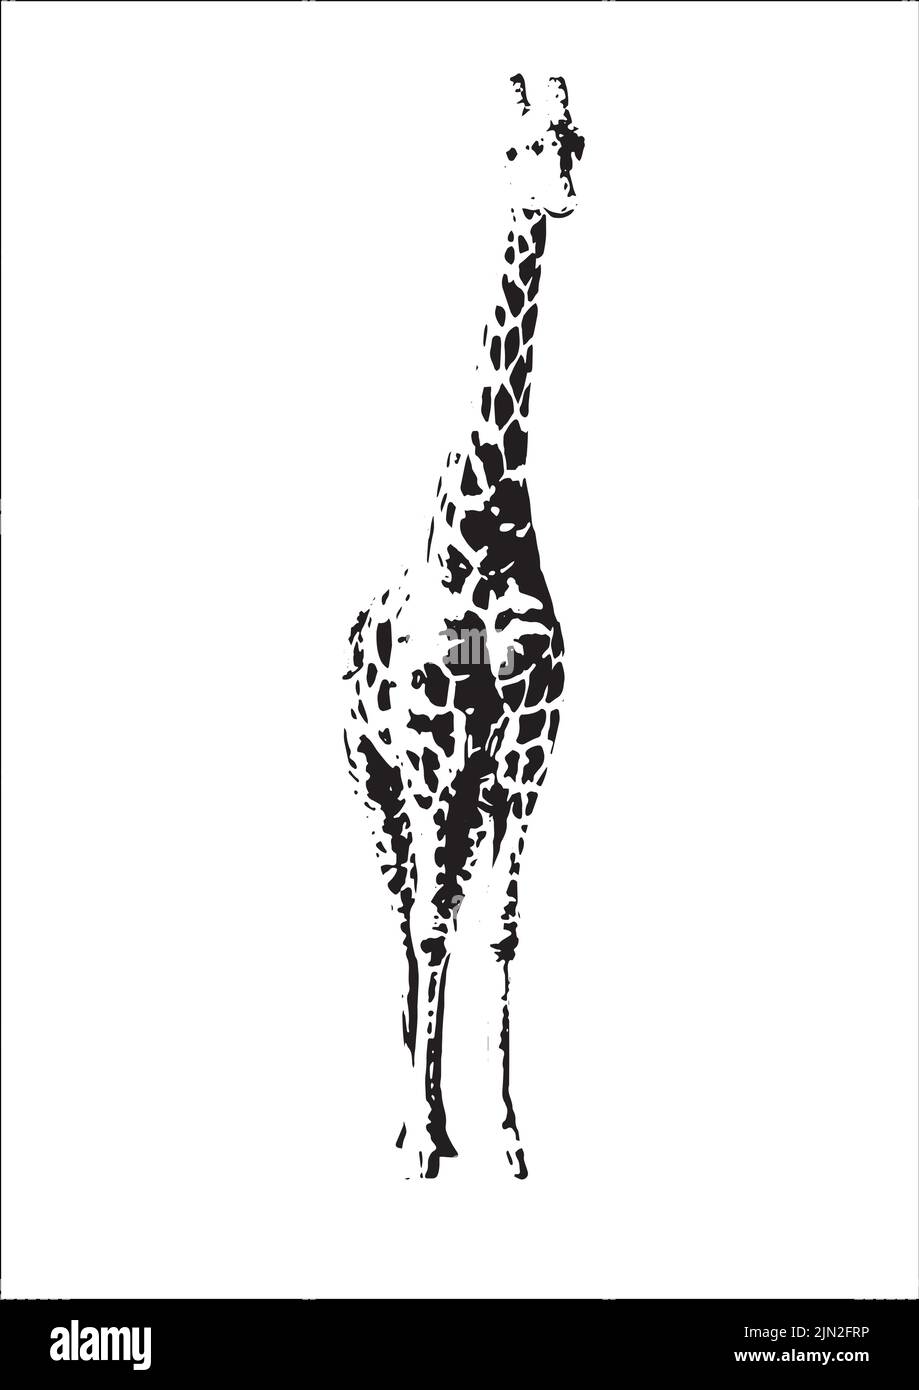 Giraffe artwork eps vector for prints and merchandising. Giraffe art for logos and design. Giraffe canvas for prints and tshirts. Stock Vector